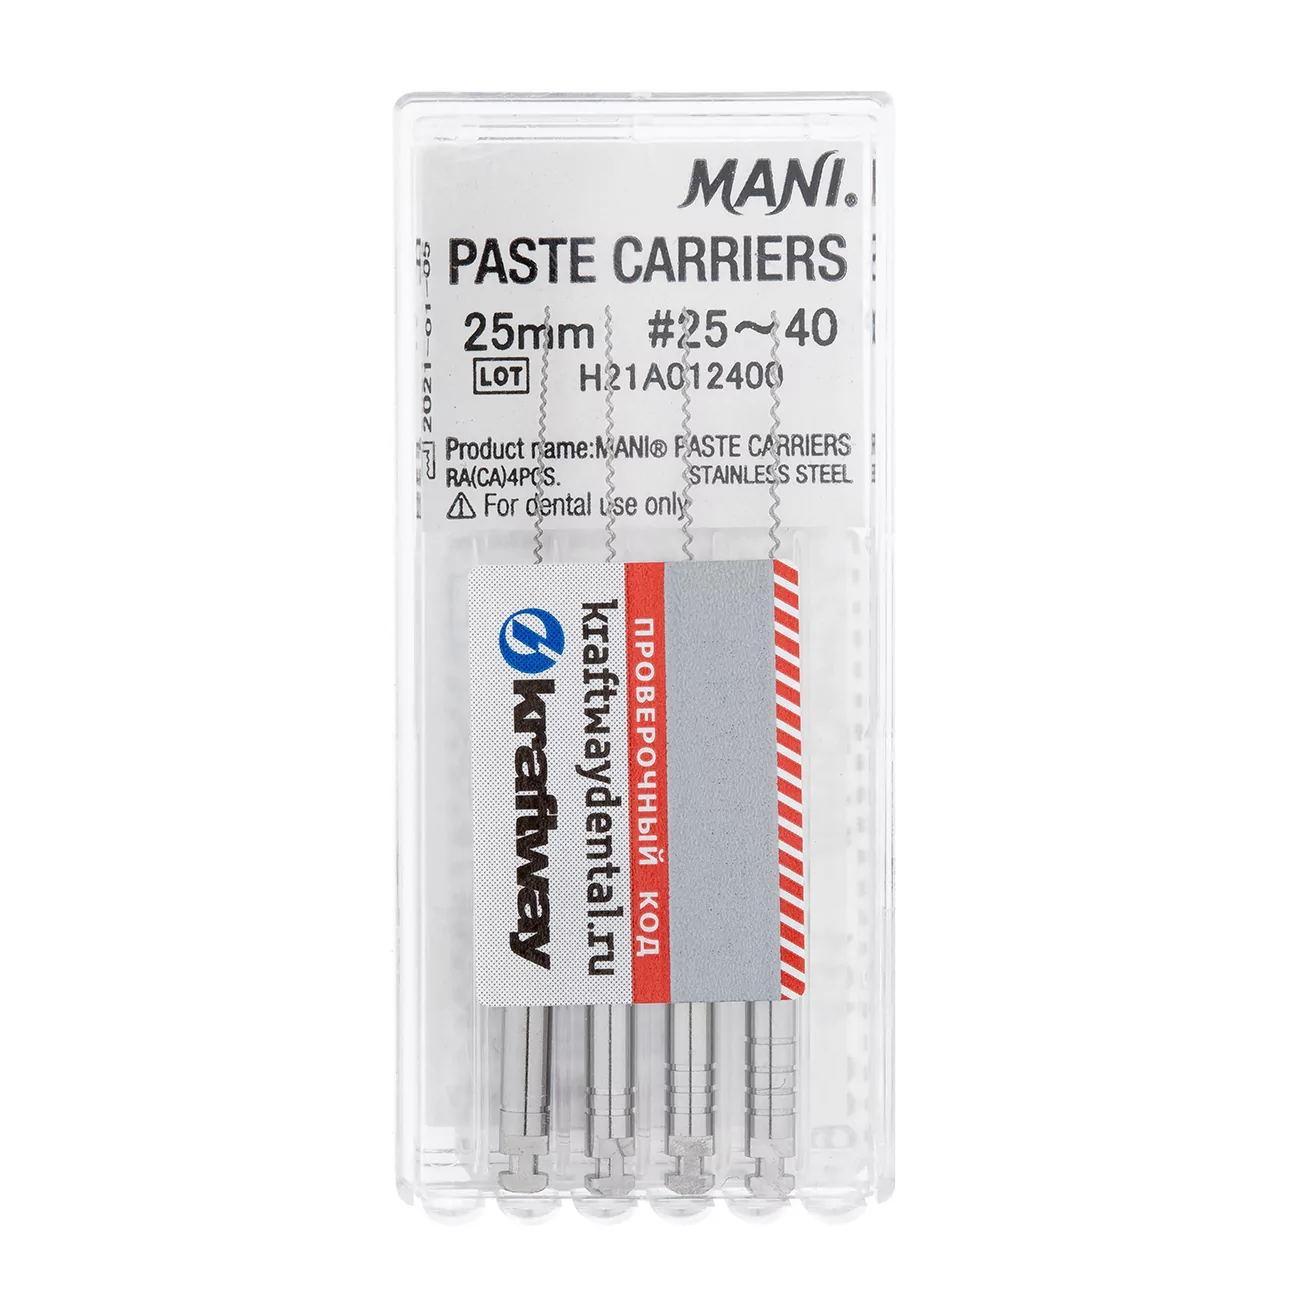 Mani Paste carriers - машинные каналонаполнители, длина 25 мм, ISO-25-40 (4шт). (комп)